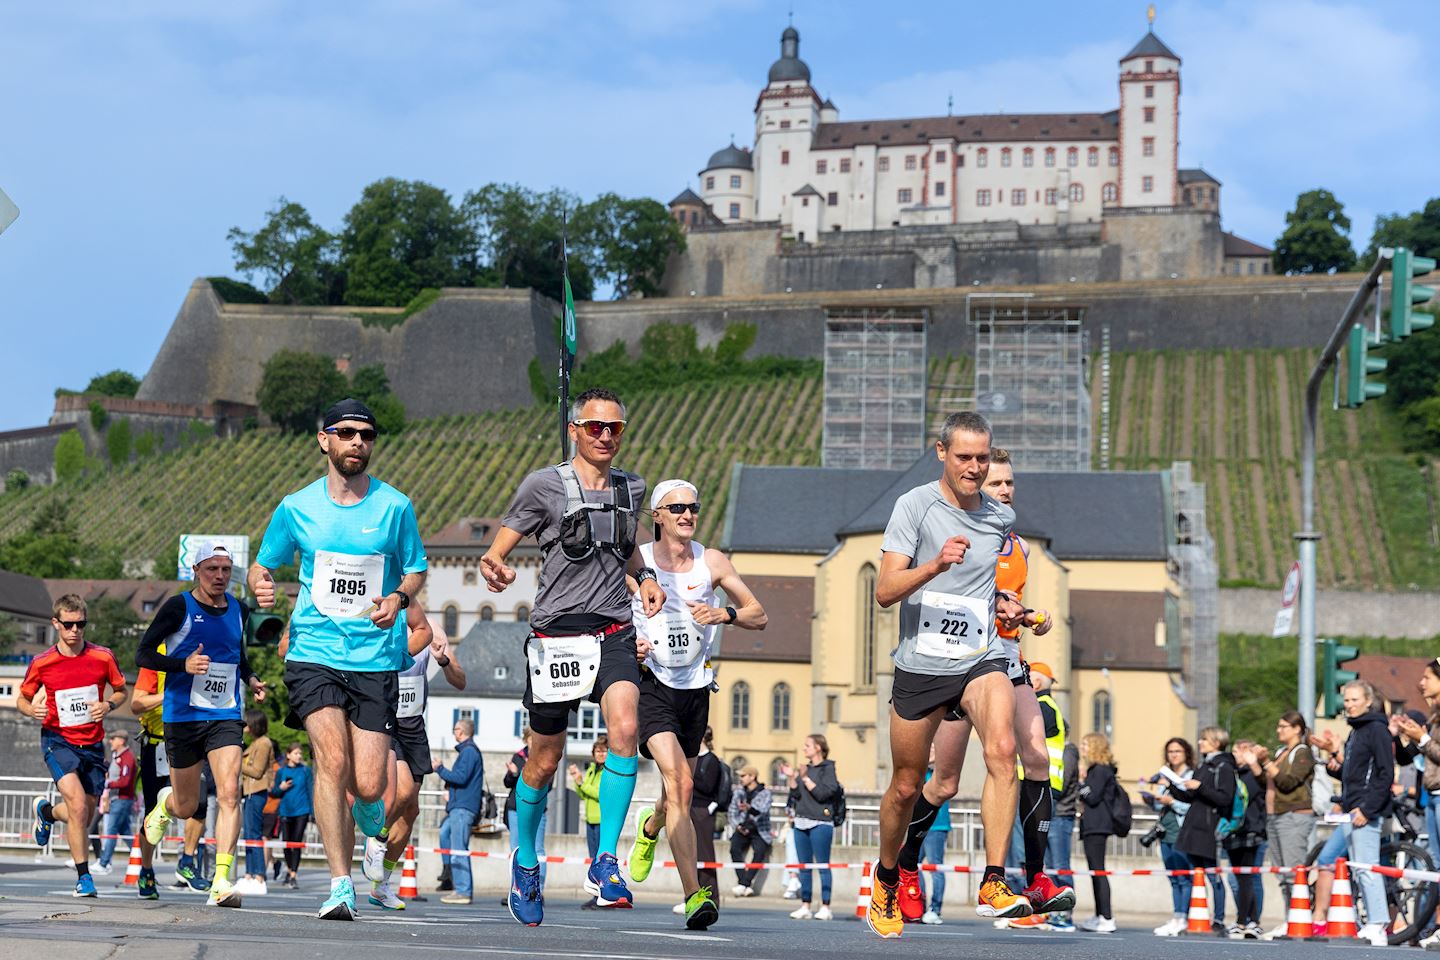 iwelt marathon wuerzburg